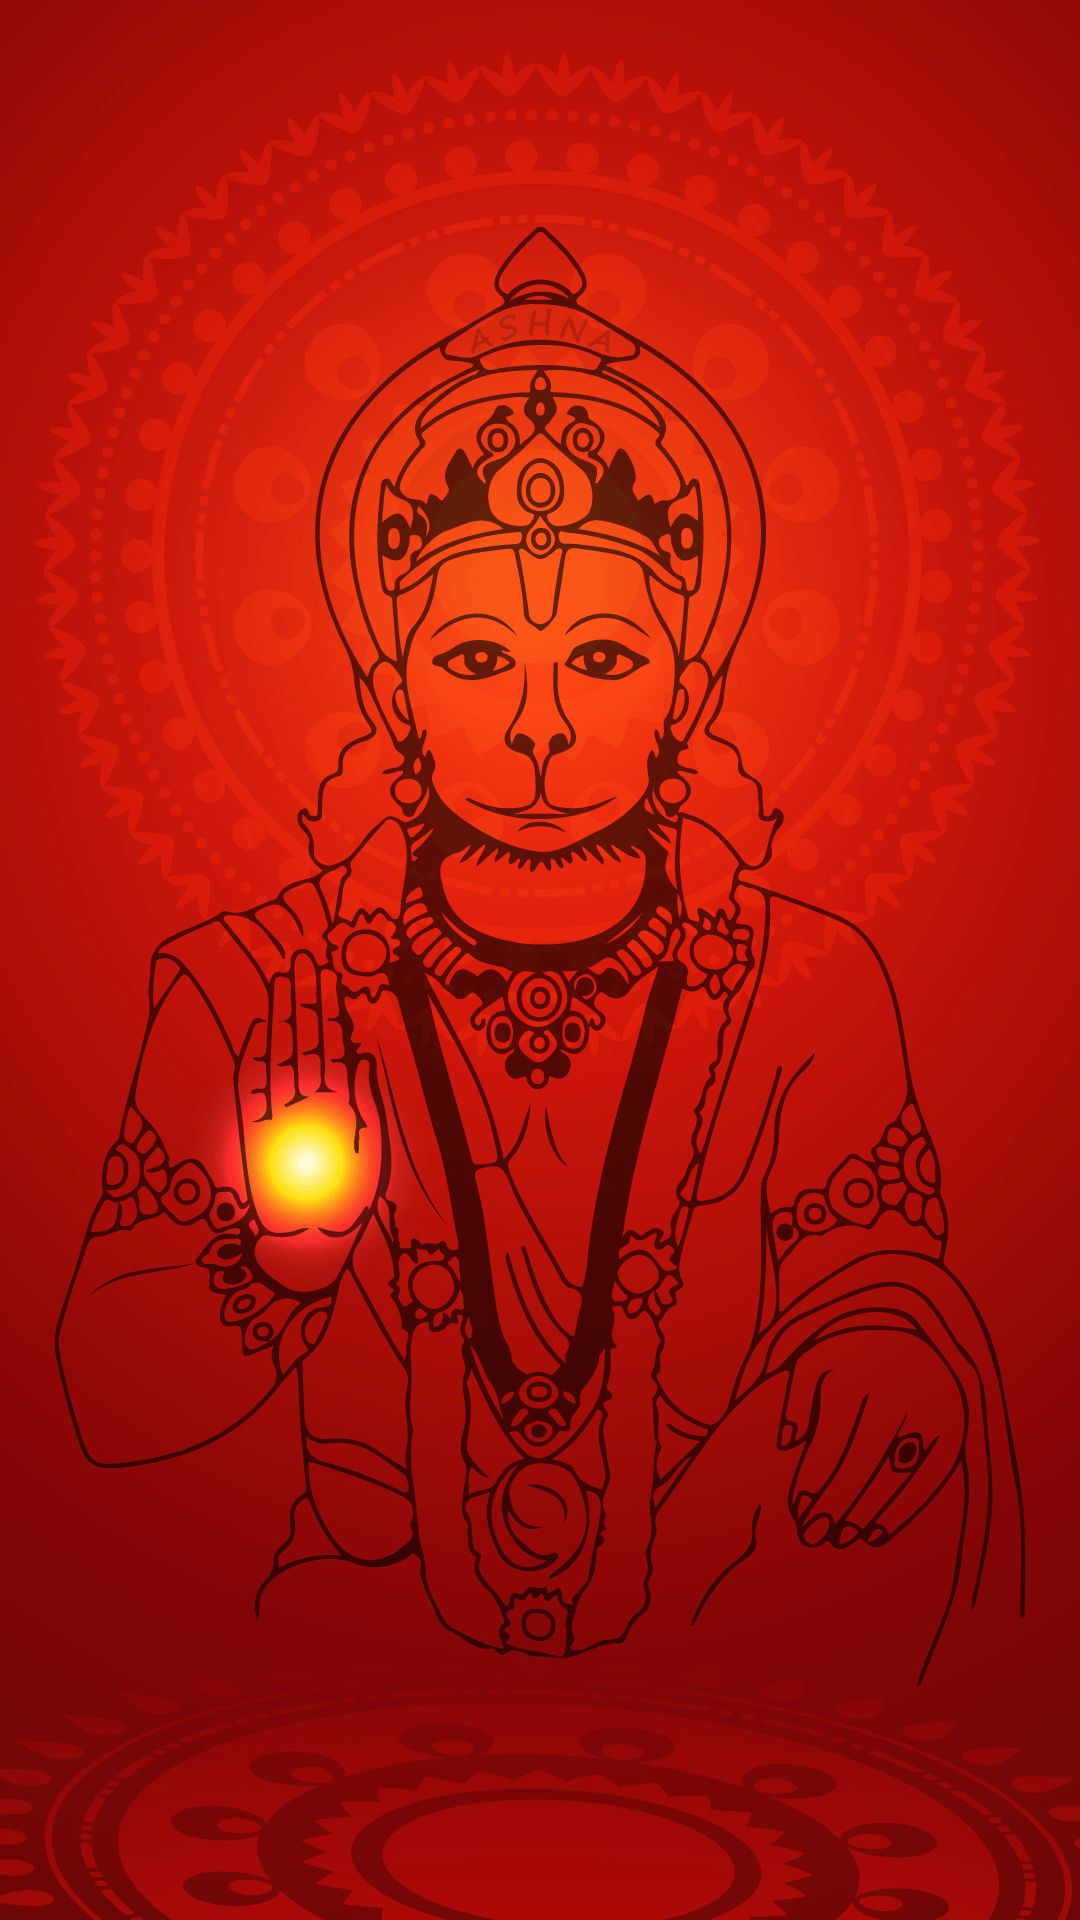 Iphone Hanuman Wallpaper, Hanuman Hd Wallpaper For Iphone, Hanuman Wallpapers Hd For Iphone